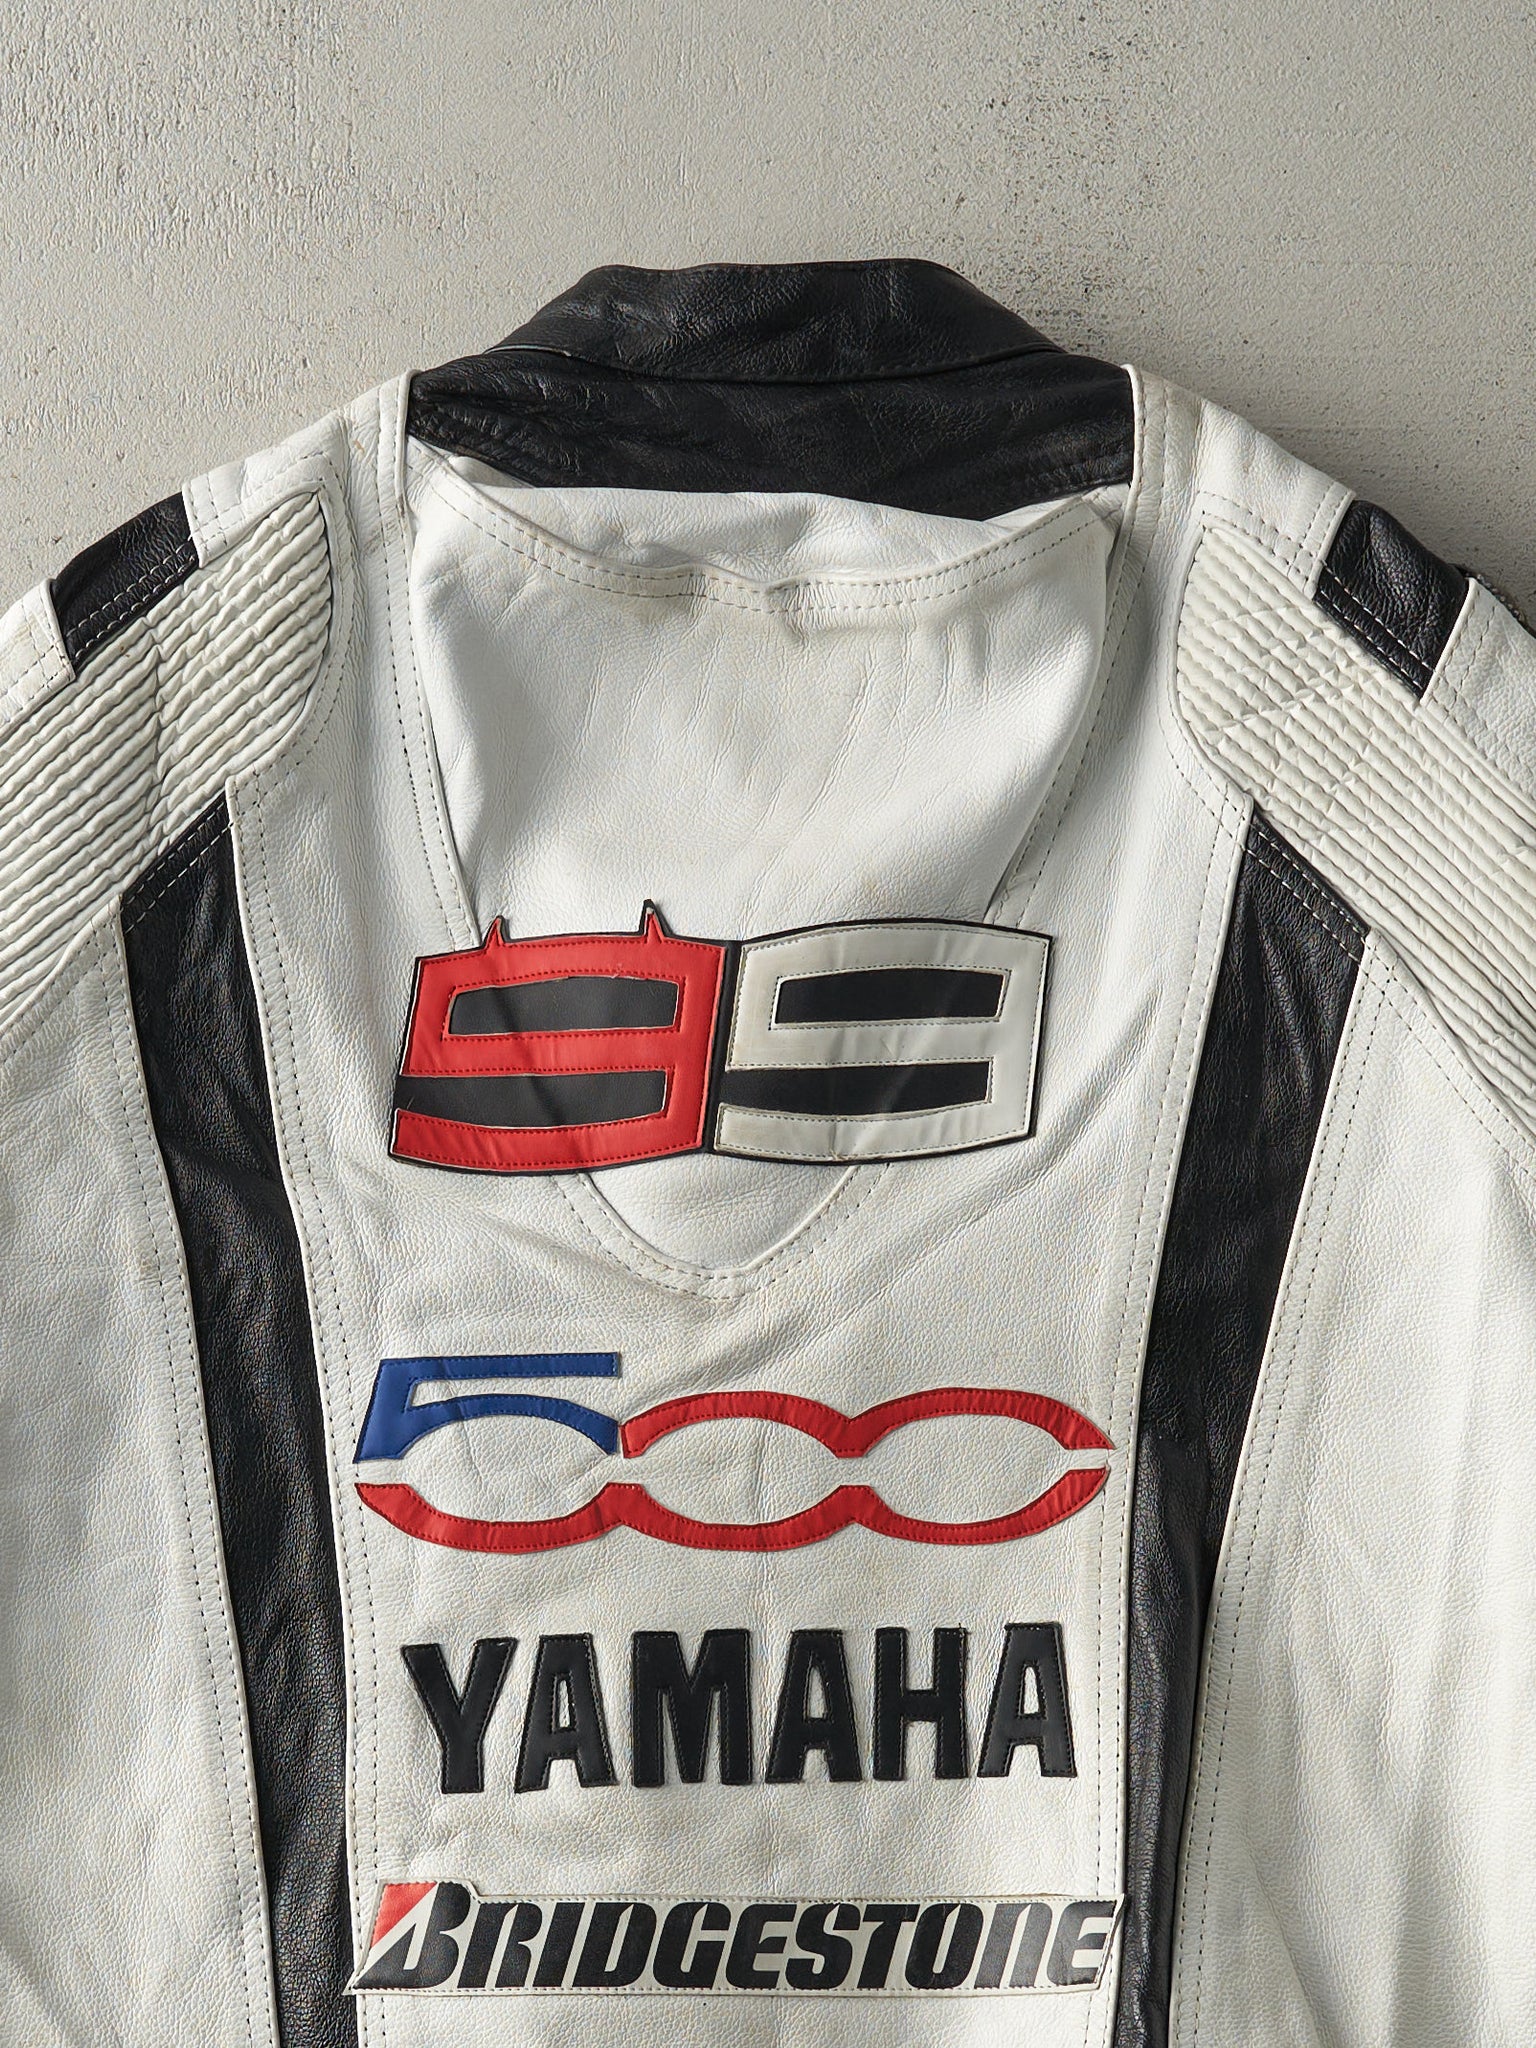 Vintage 90s White & Black Yamaha Leather Racing Biker Jacket (M)